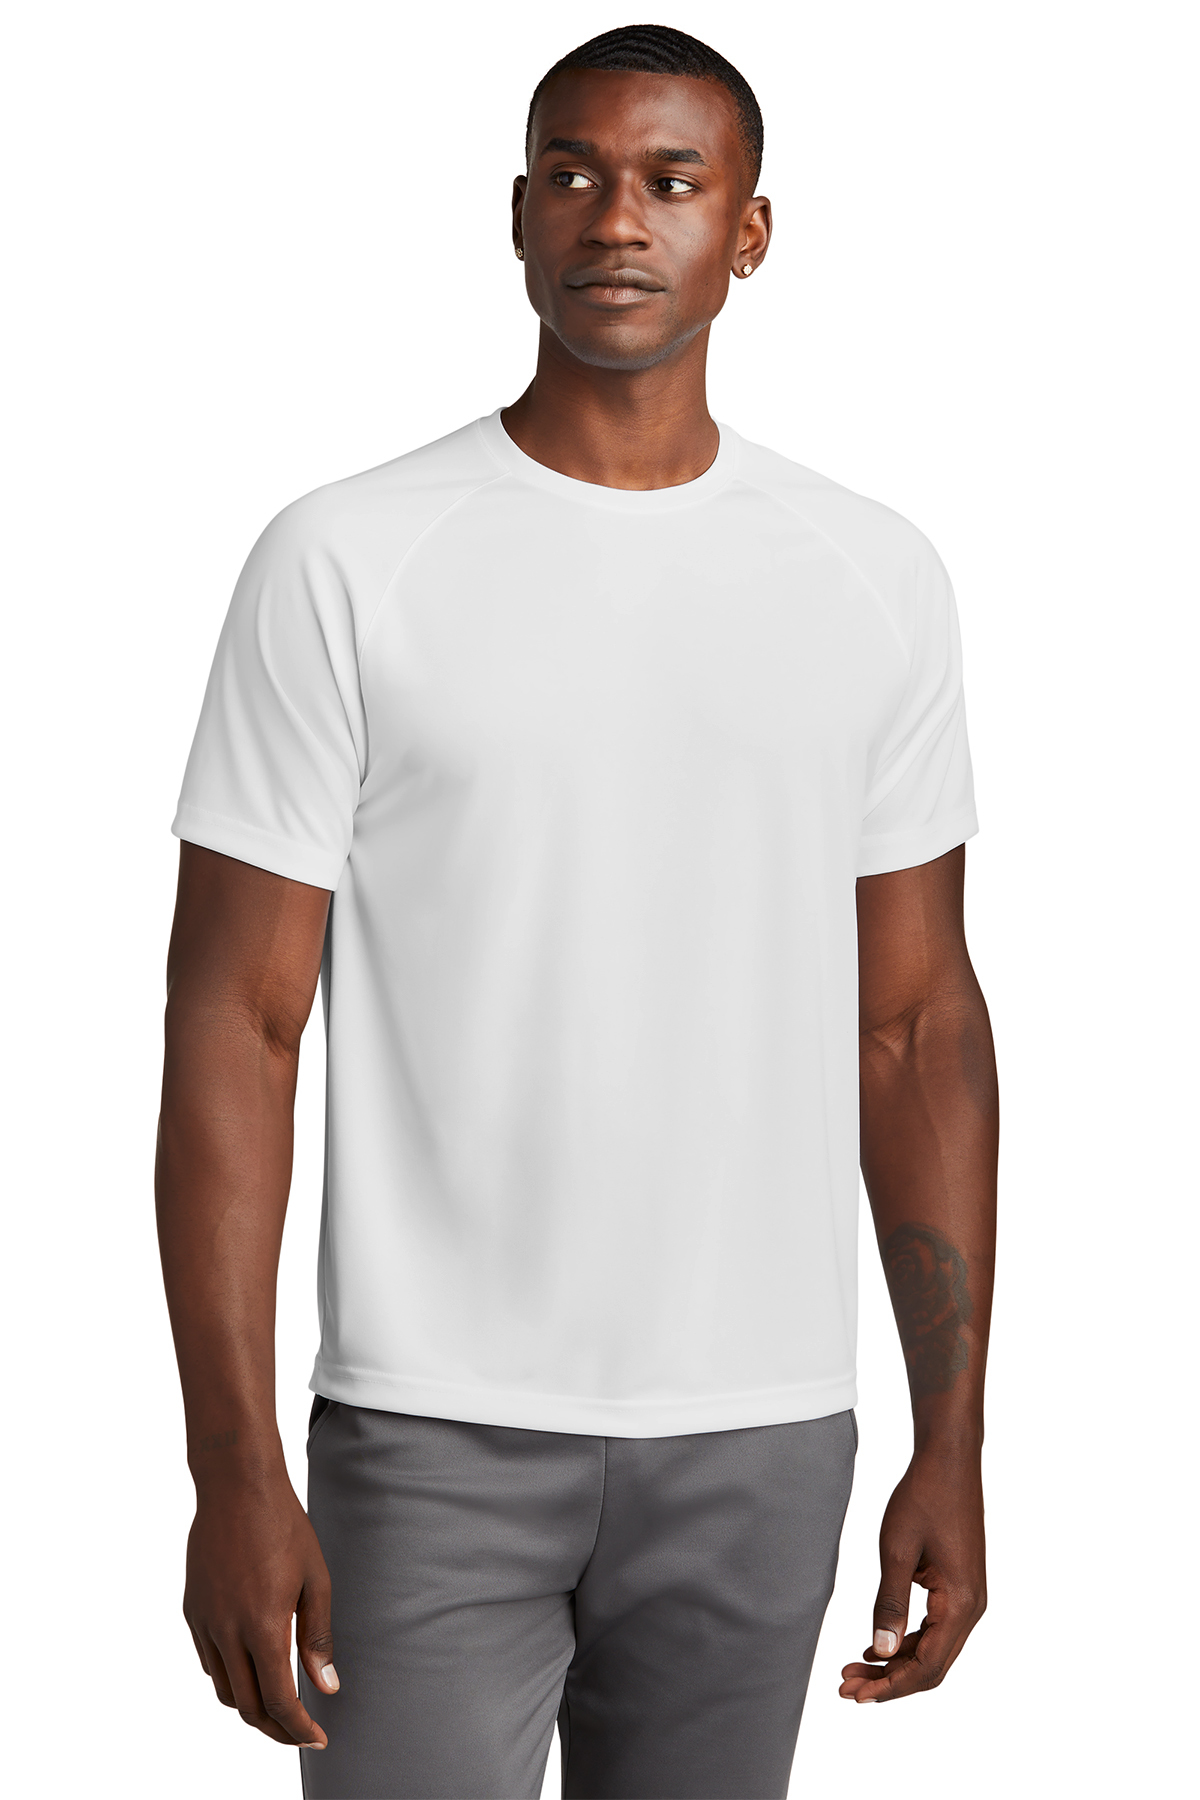 Blank Activewear M720 - Men's T-Shirt Short Sleeve, 100% Polyester  Interlock, Dry Fit